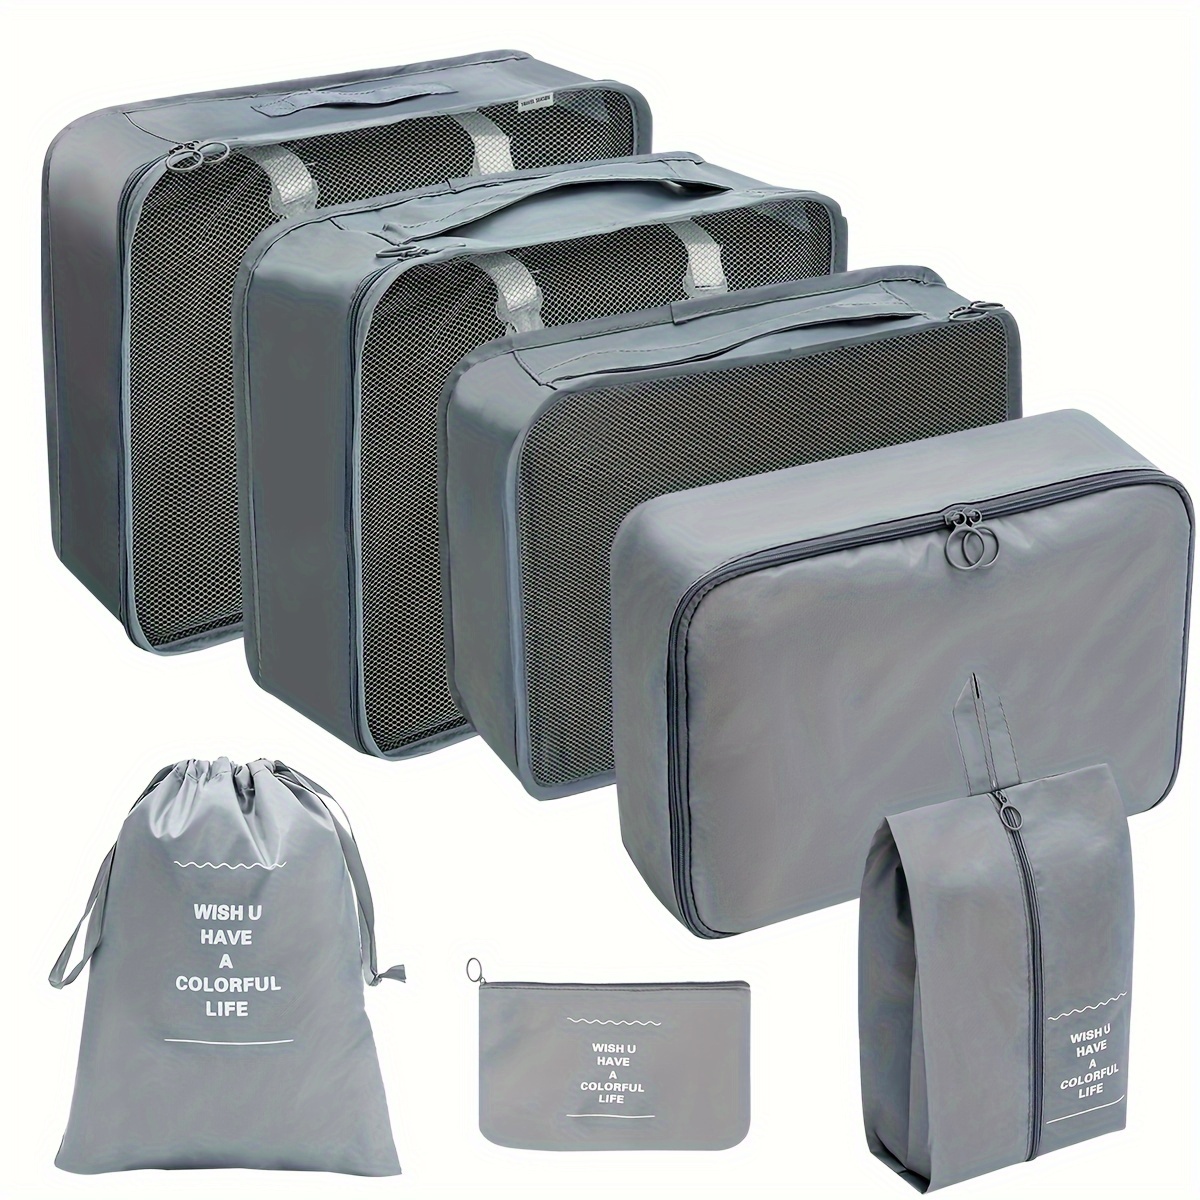 

7pcs Travel Storage Bag Set, Suitcase Luggage Packing Cubes, Clothes Underwear Organizer Bag Shoes Bag